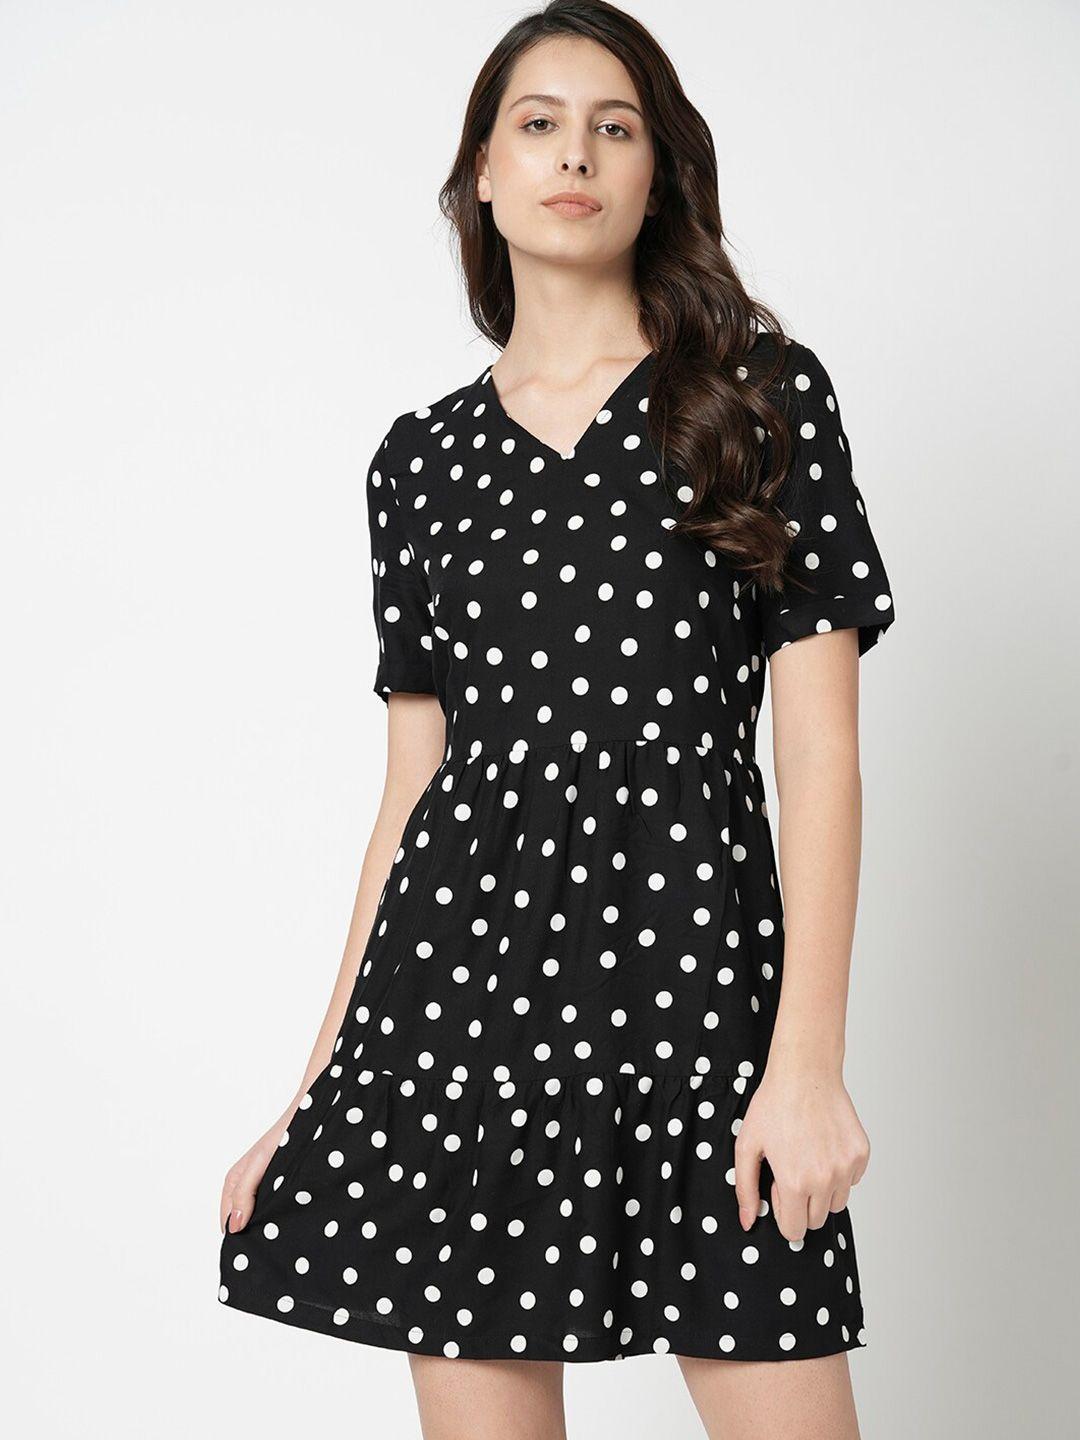 vero moda black polka dot print ruffled fit & flare dress